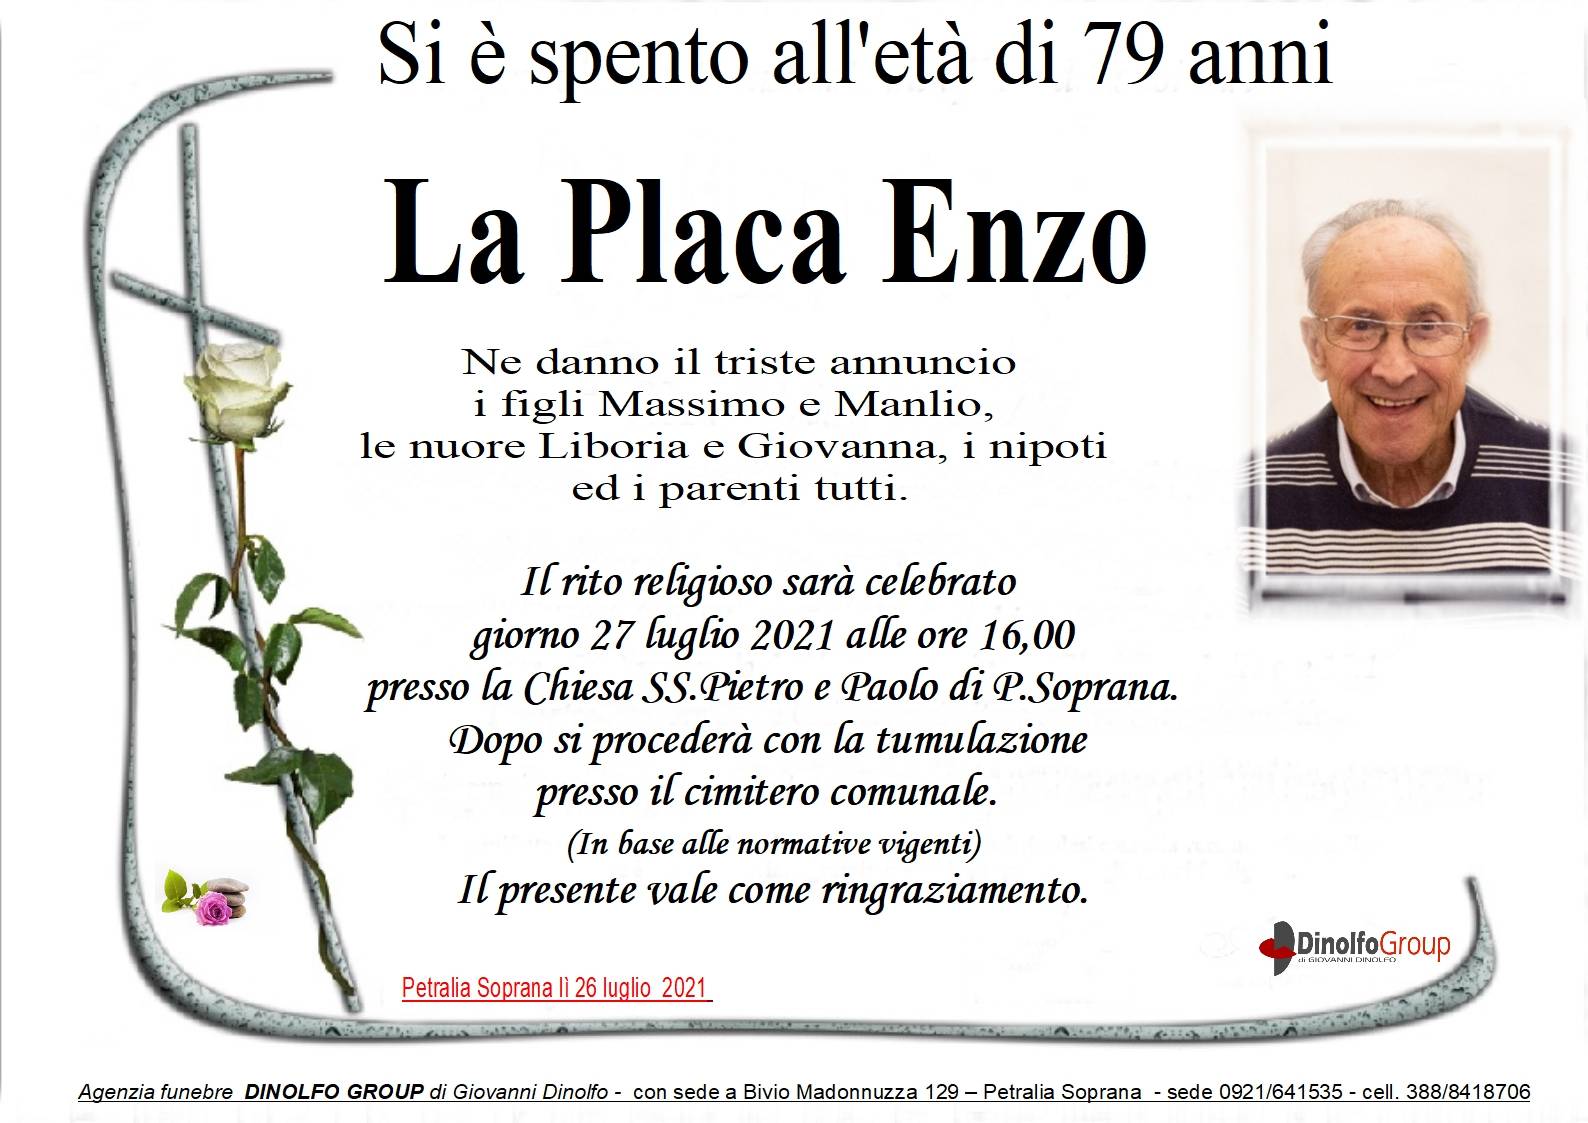 Enzo La Placa